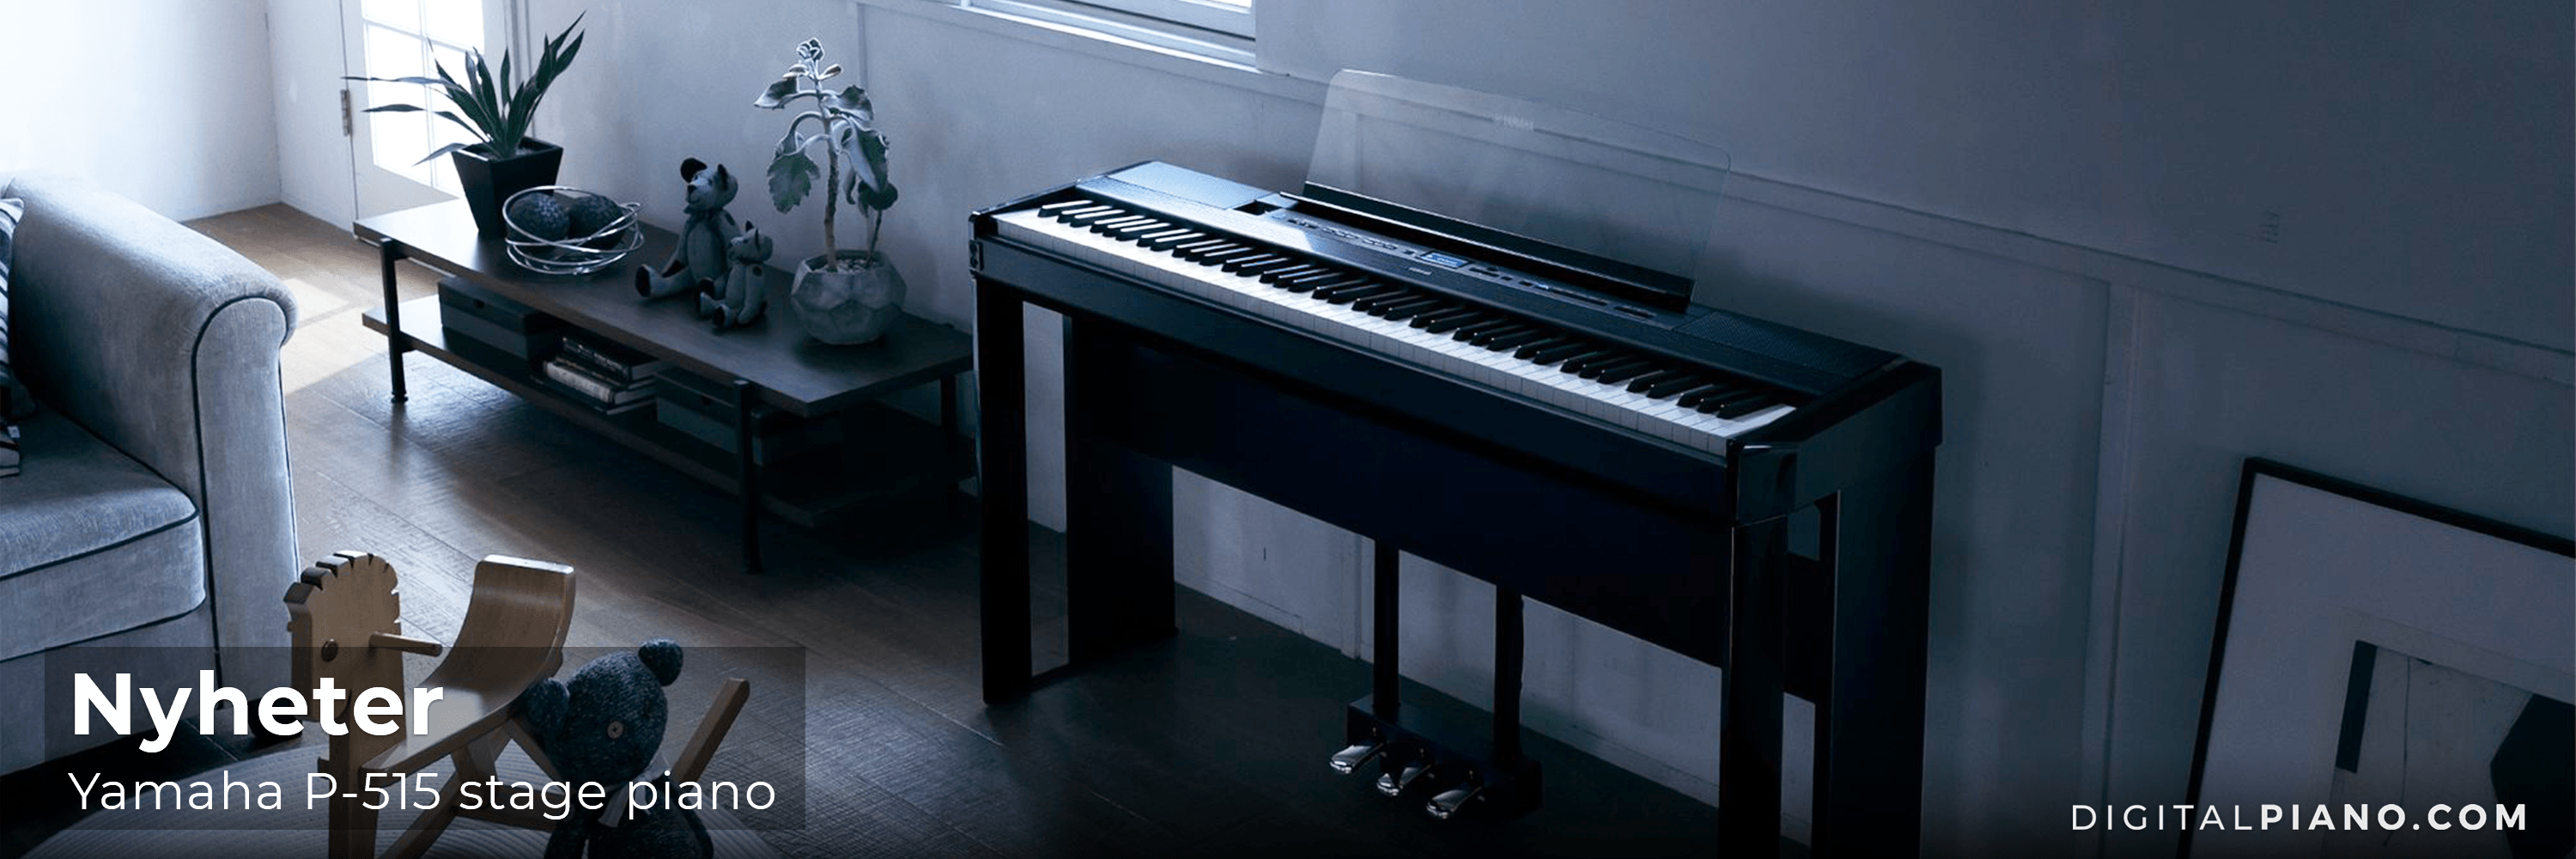 Nyheter - Yamaha P-515 stage piano